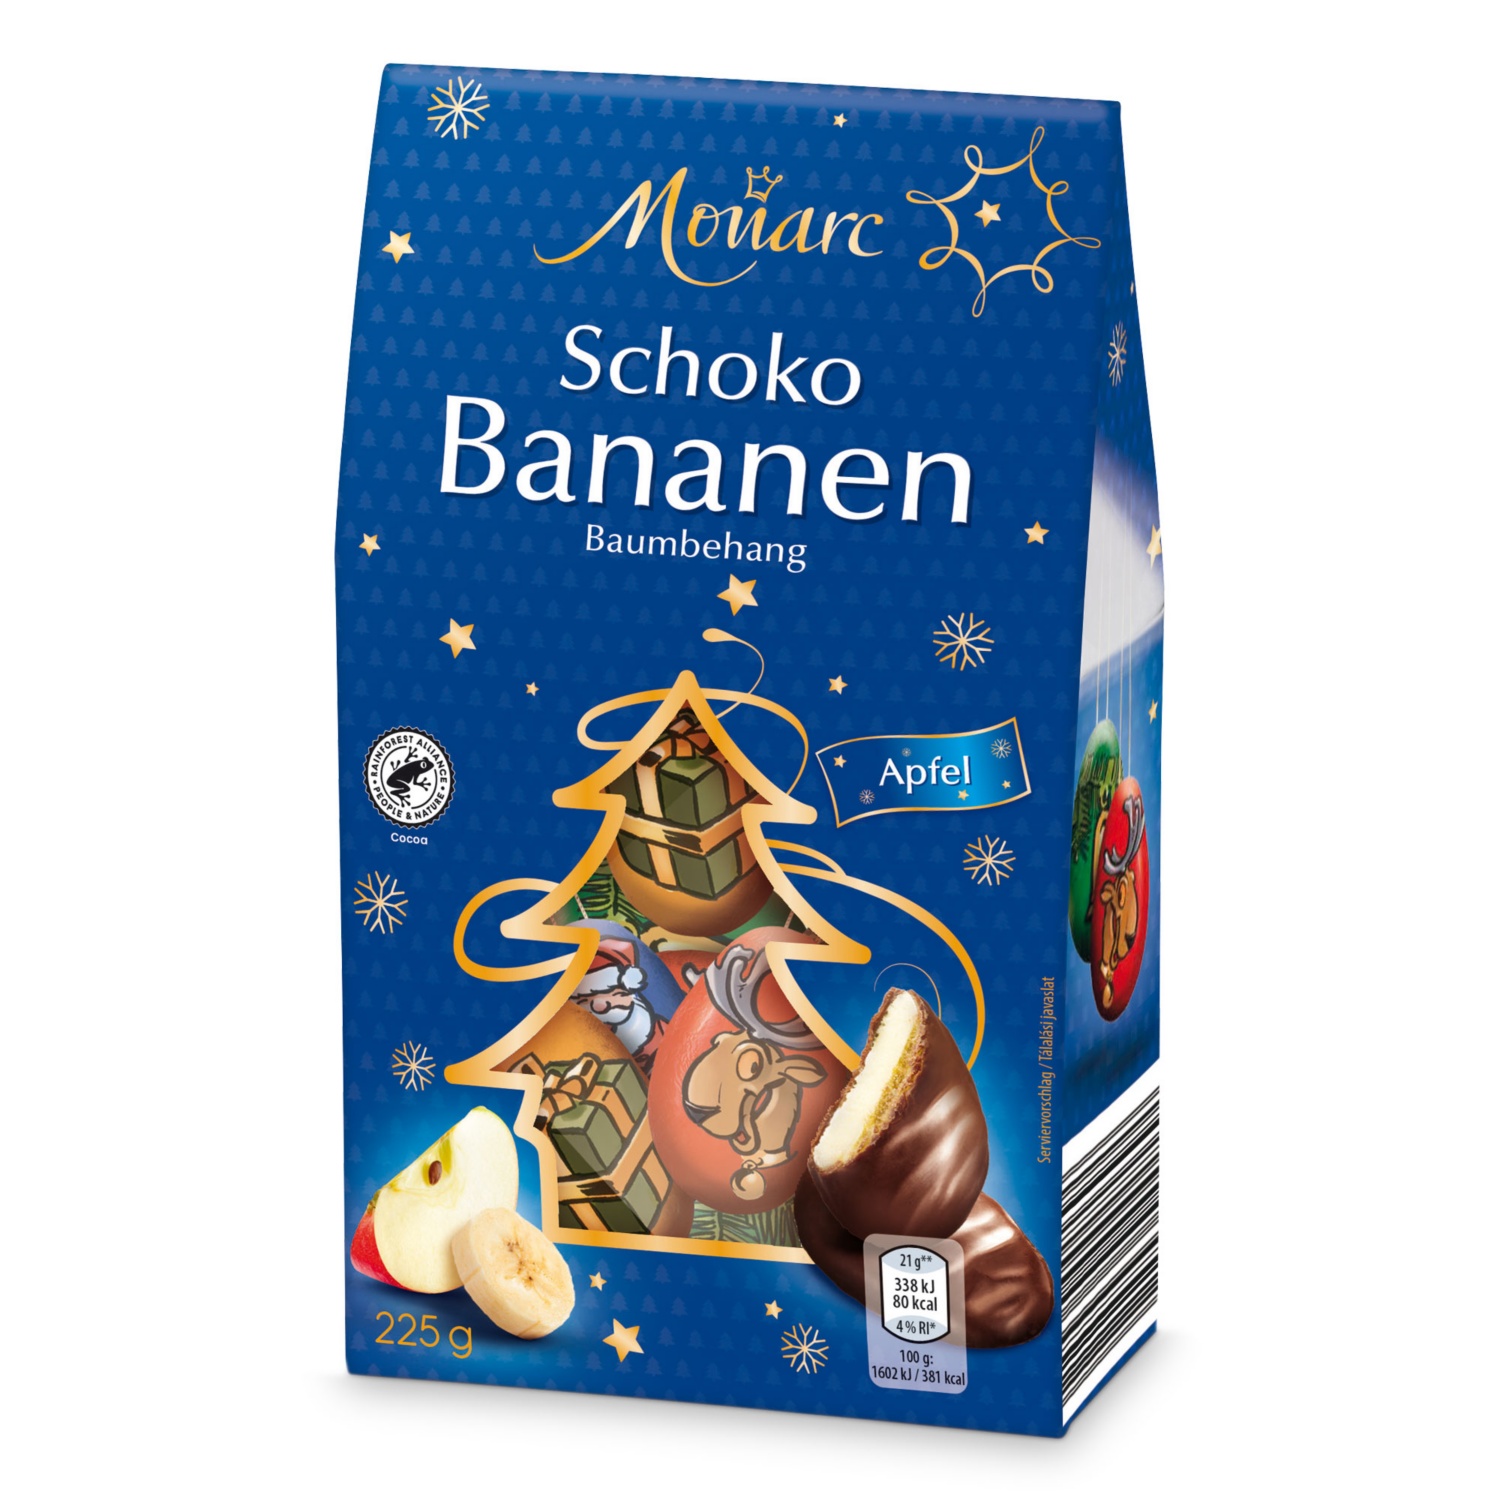 MONARC Schoko Bananen-Baumbehang, Schokobananen